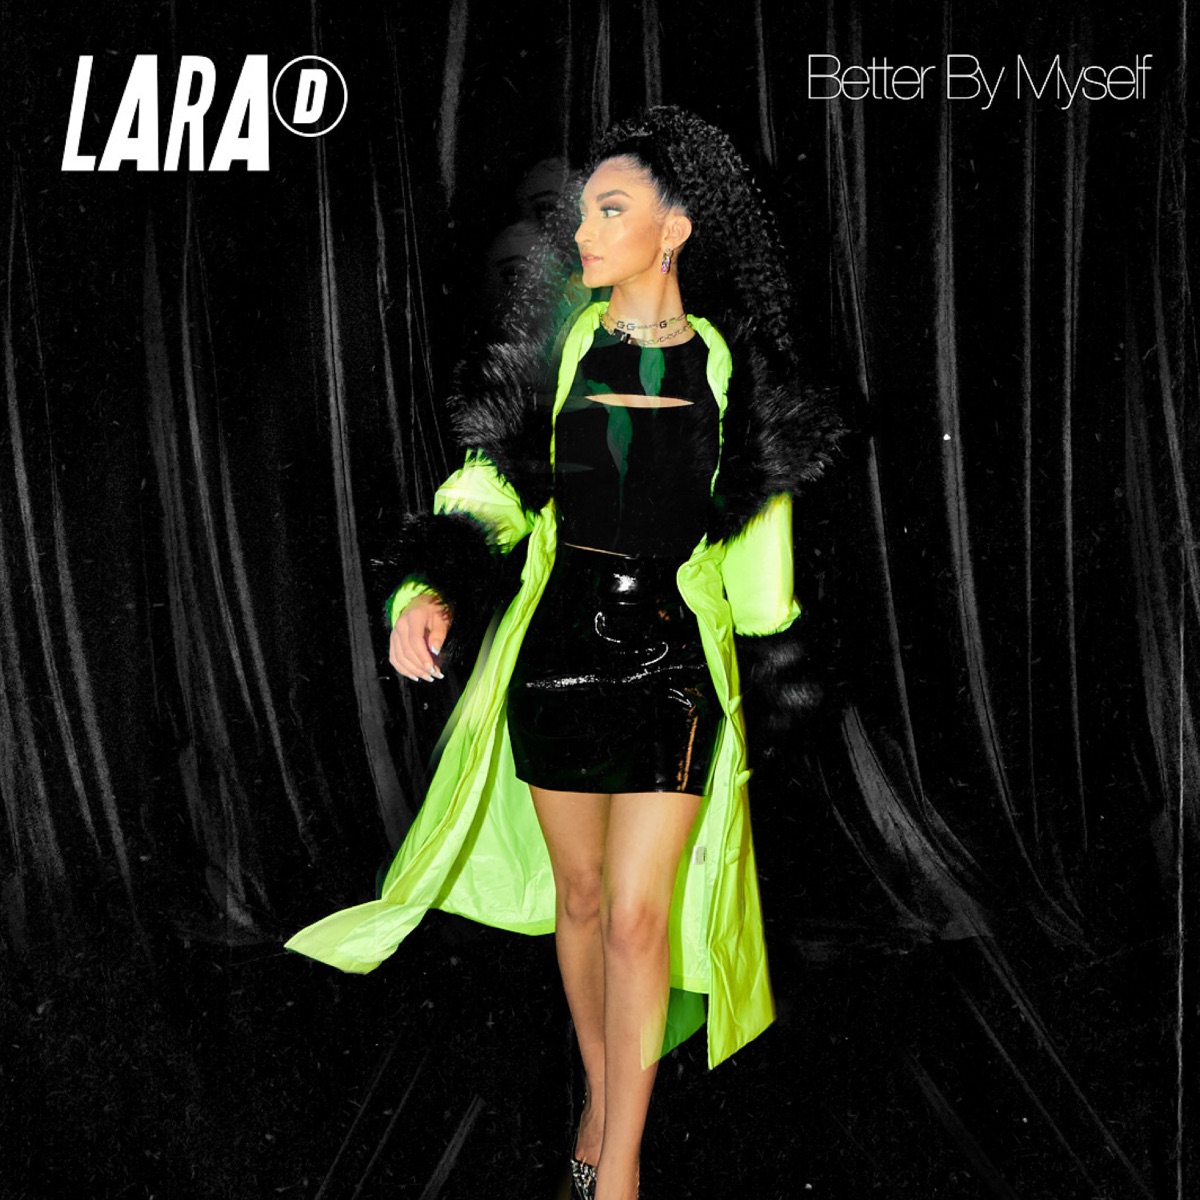 Lara D - Better By Myself - Single